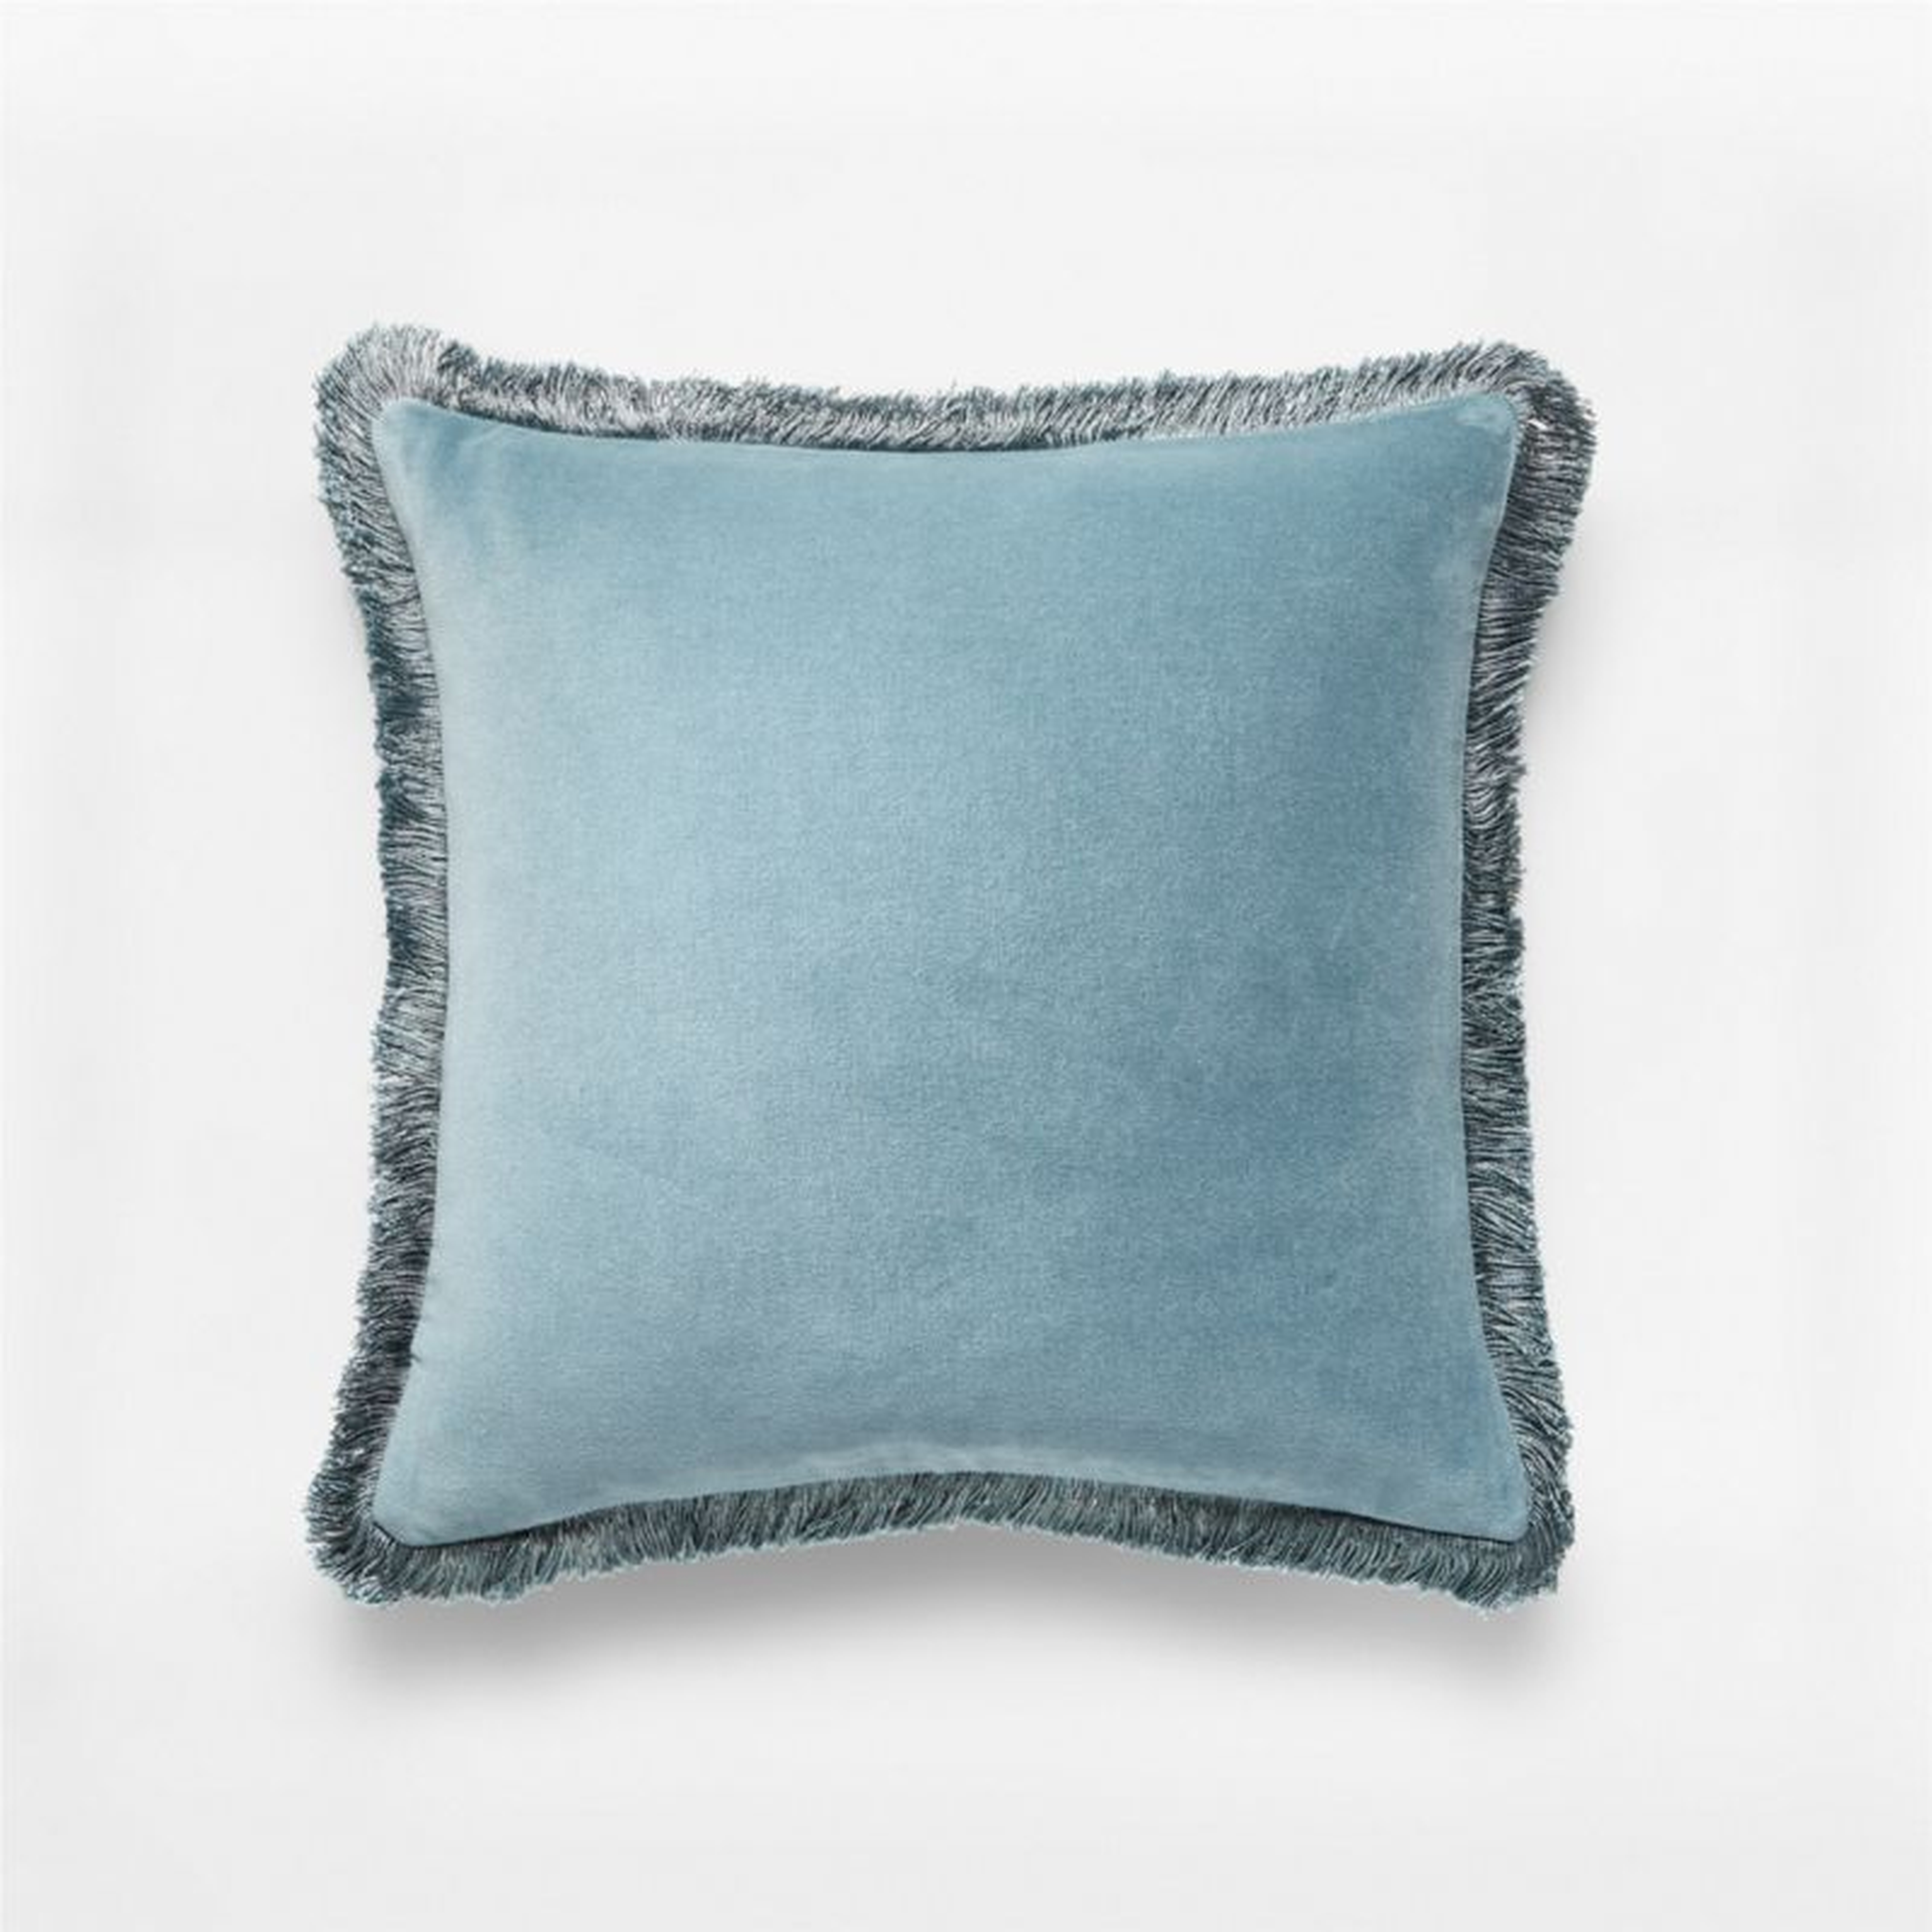 Bettie Mineral Blue Pillow, Feather-Down Insert, 16" x 16" - CB2